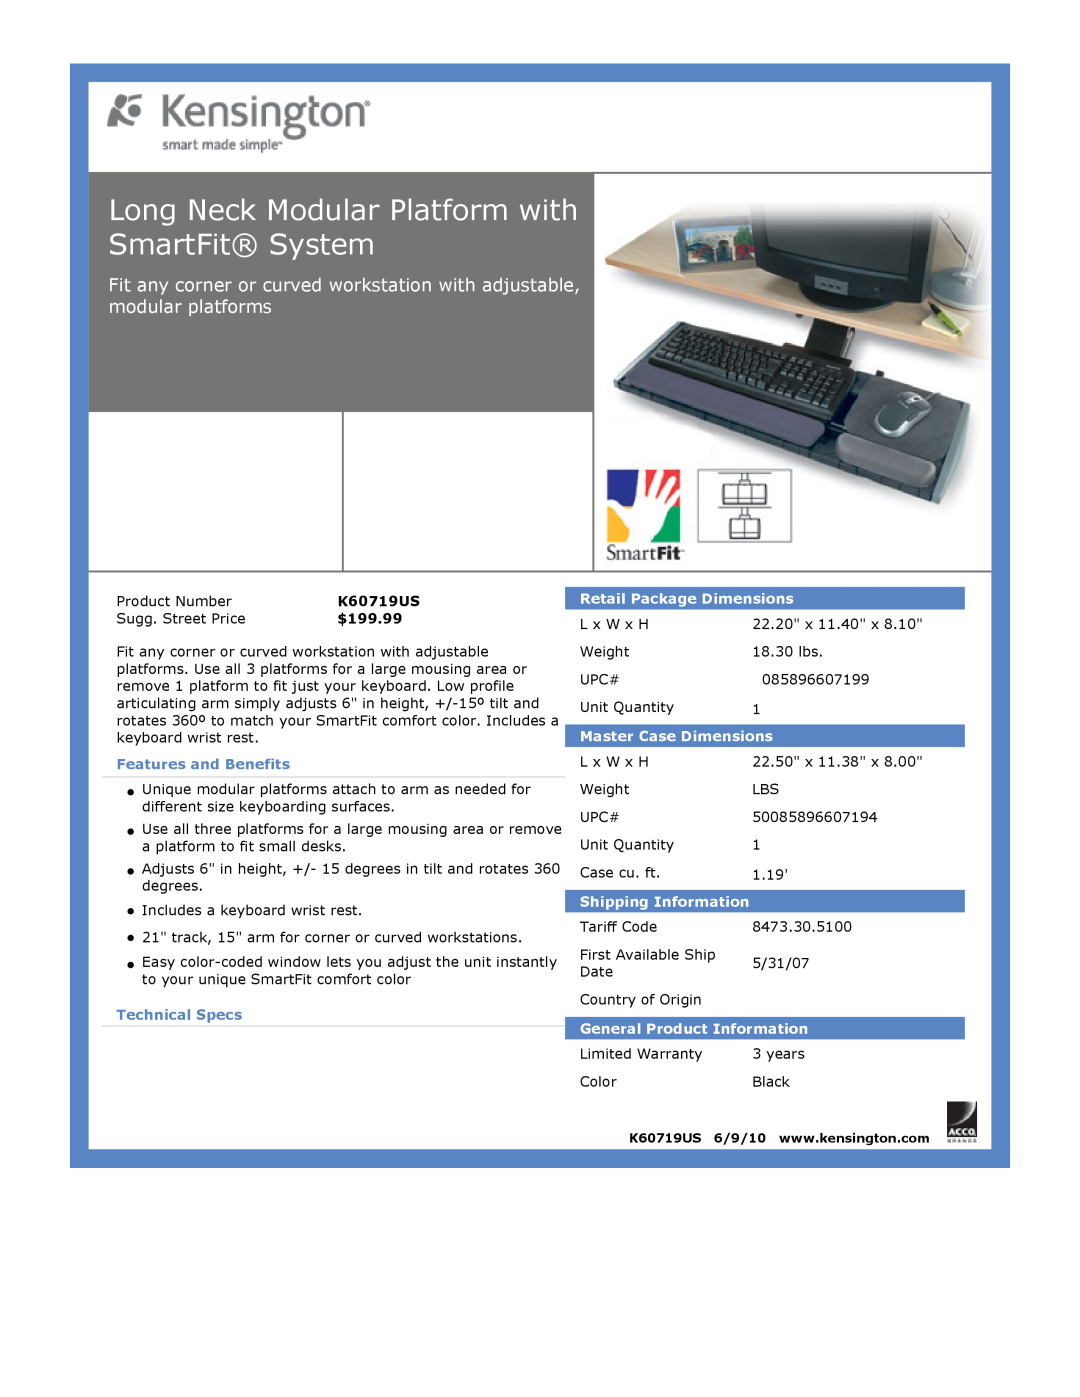 Kensington EU64325 Long Neck Modular Platform with SmartFit System, $199.99, Features and Benefits, Technical Specs 